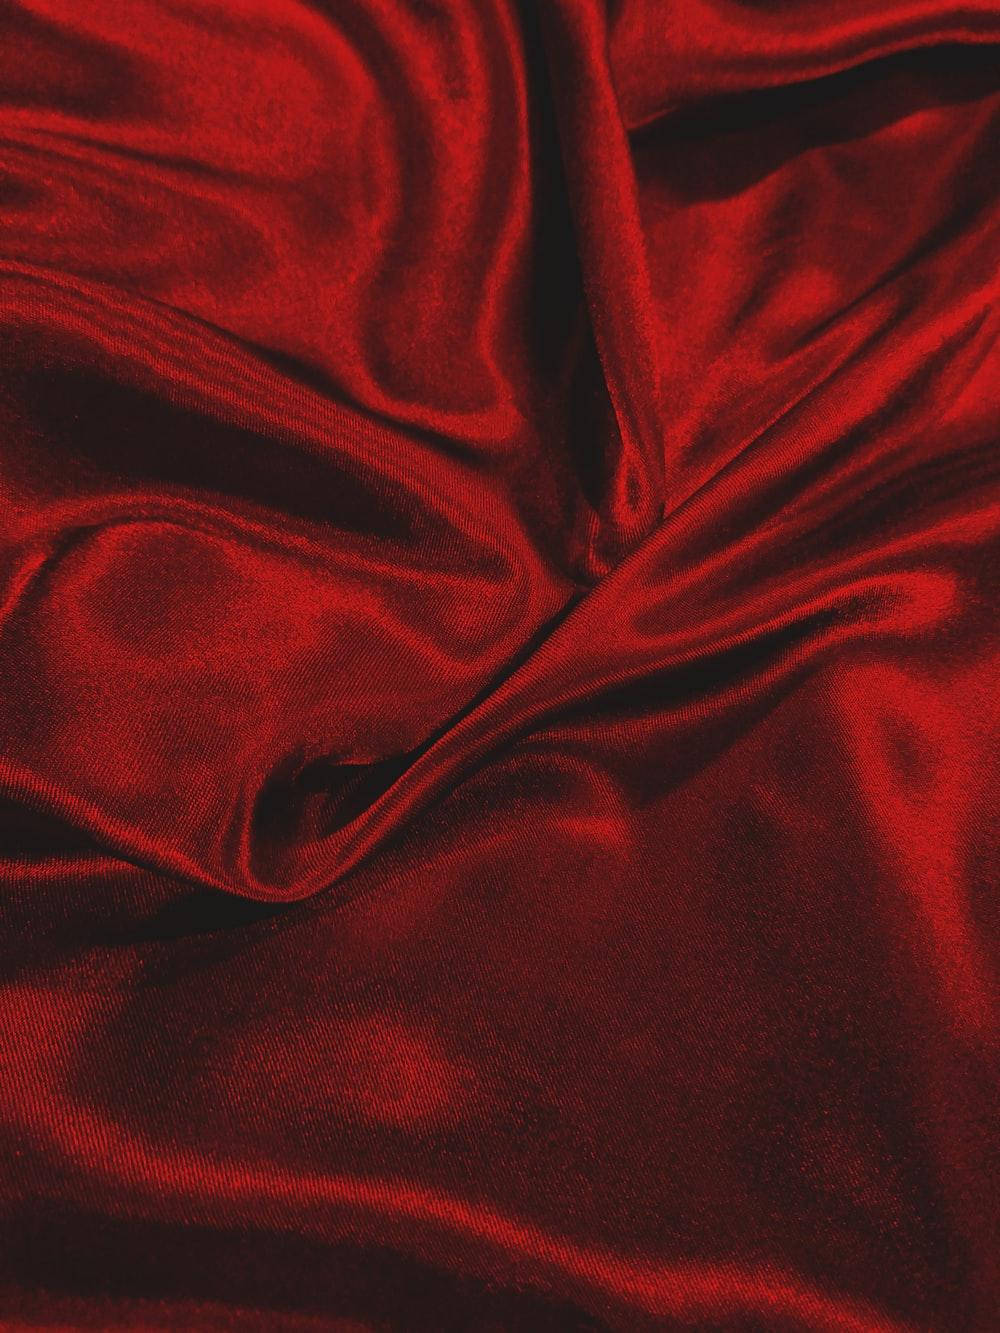 Red Baddie Fabric Wallpaper